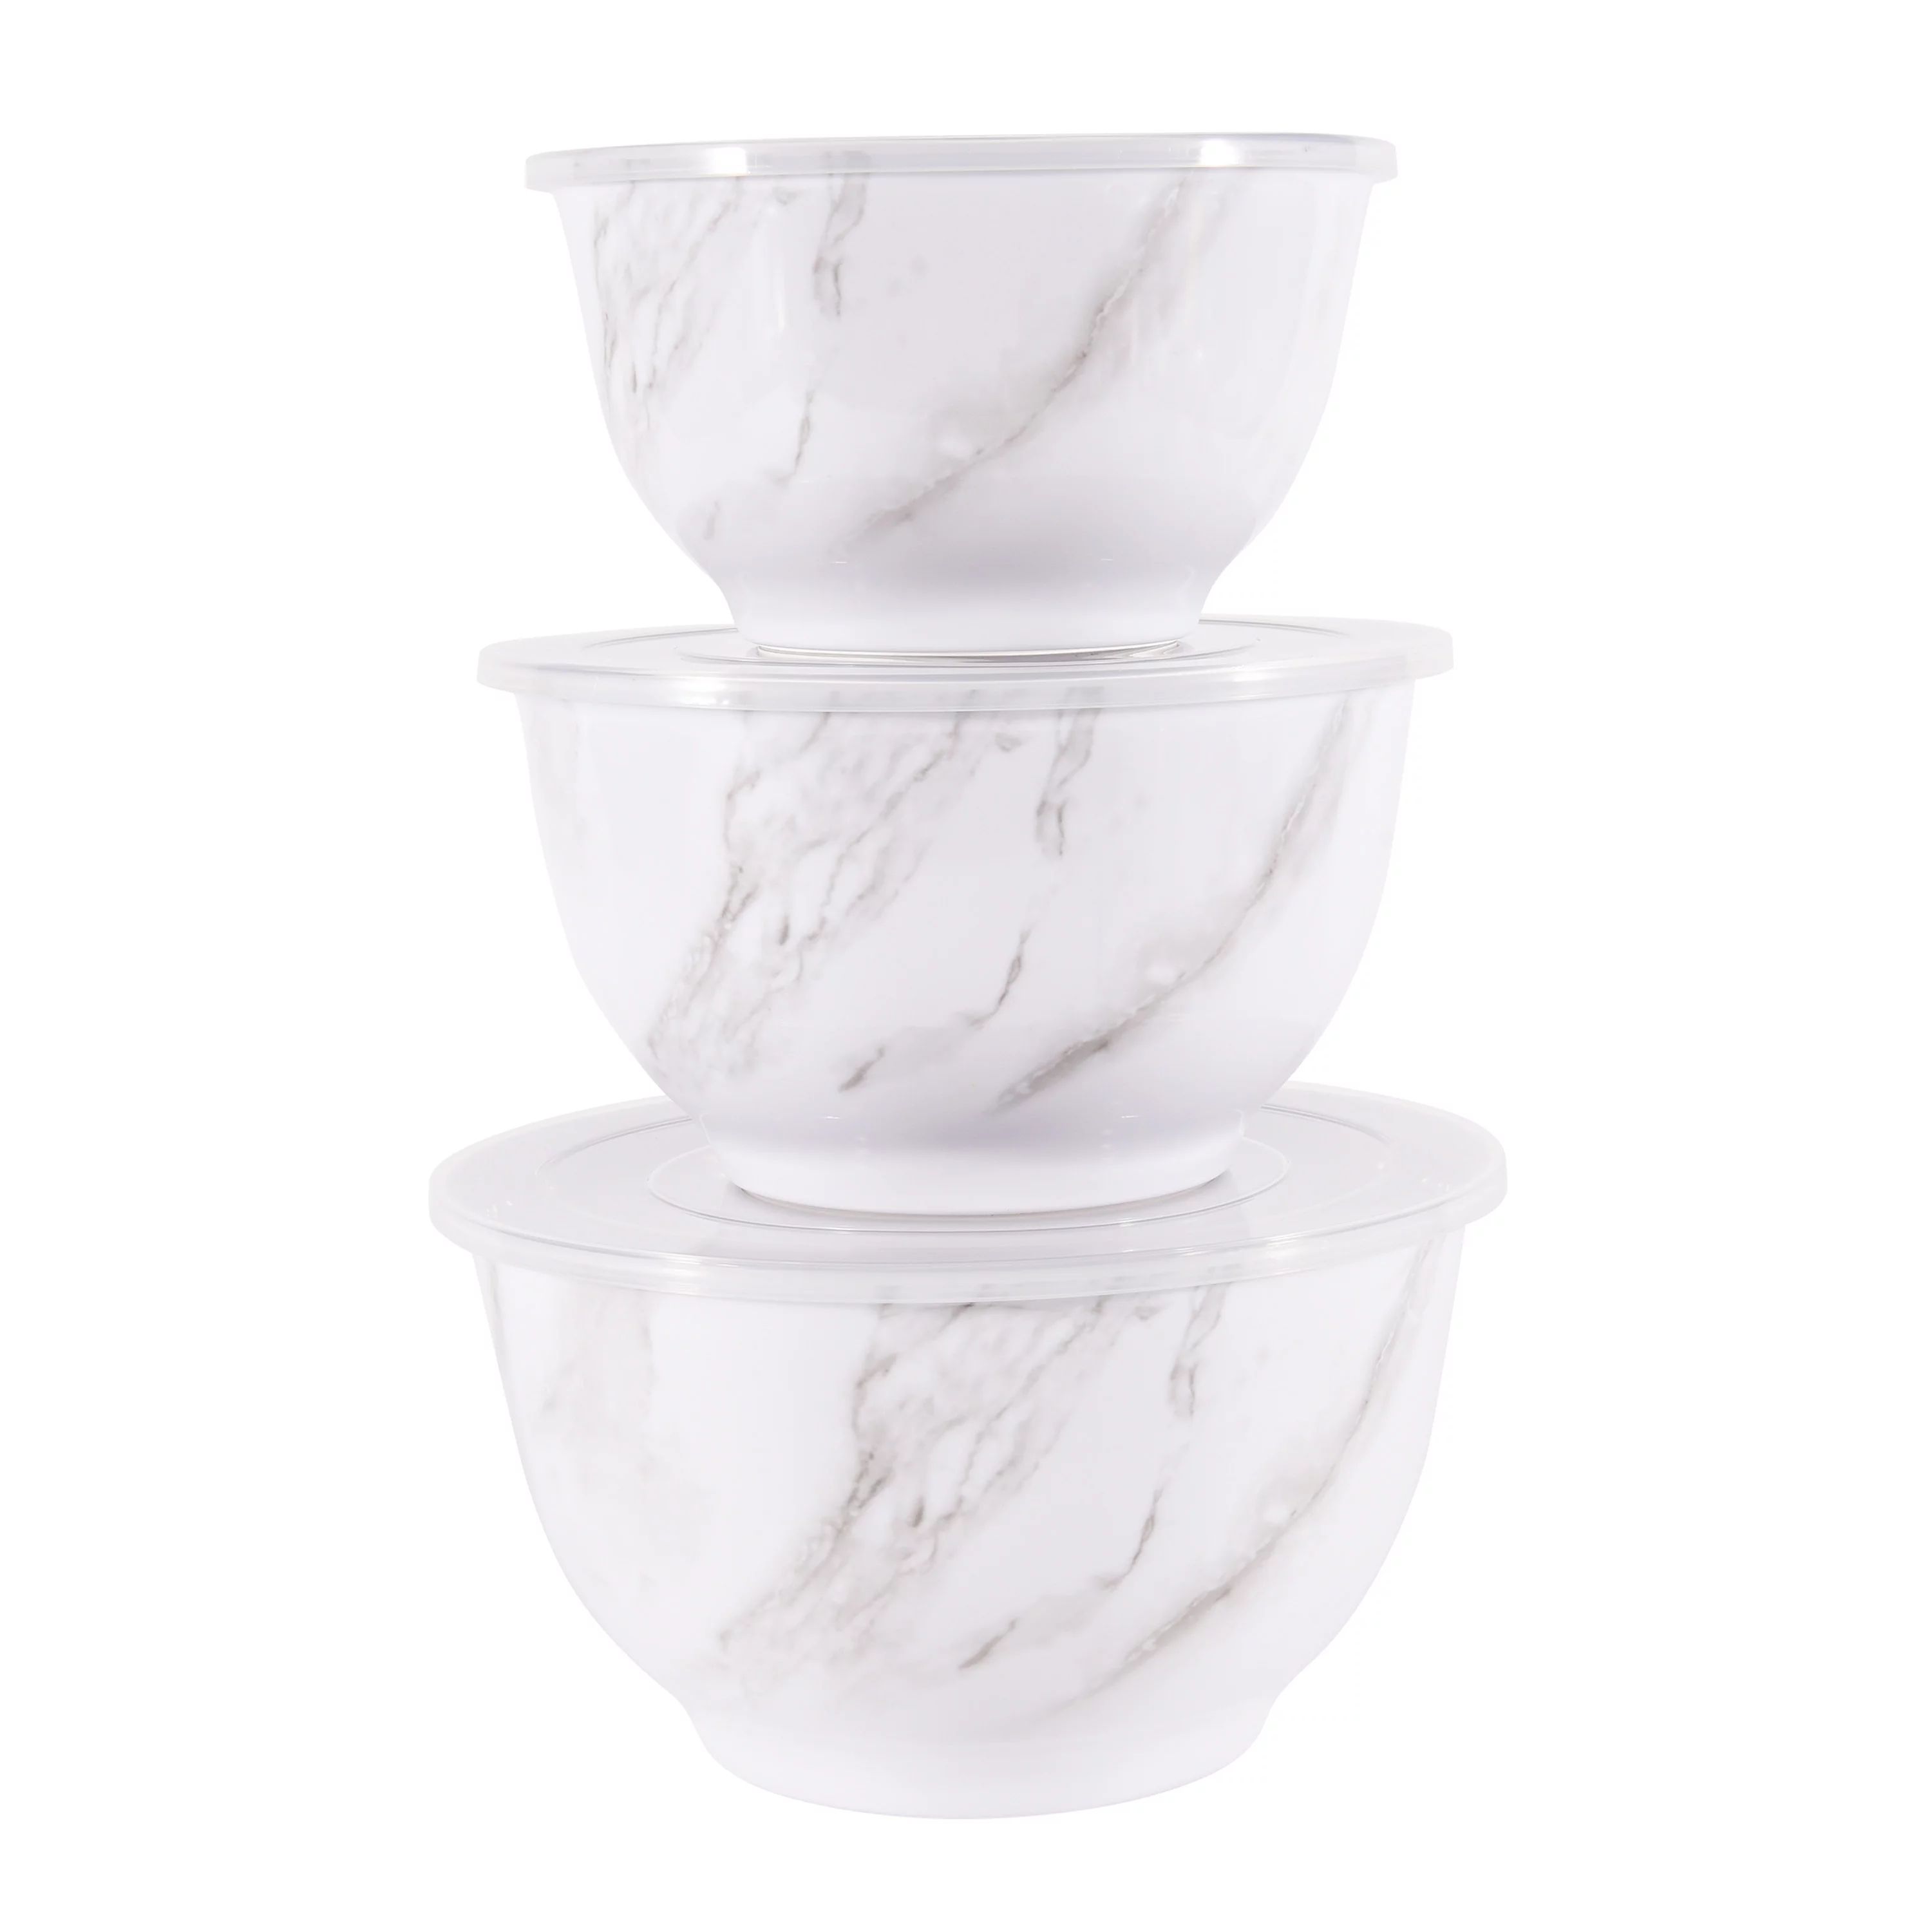 Better Homes & Gardens 6-Piece Melamine Serving Bowl Set with Lids, White Marble Print | Walmart (US)